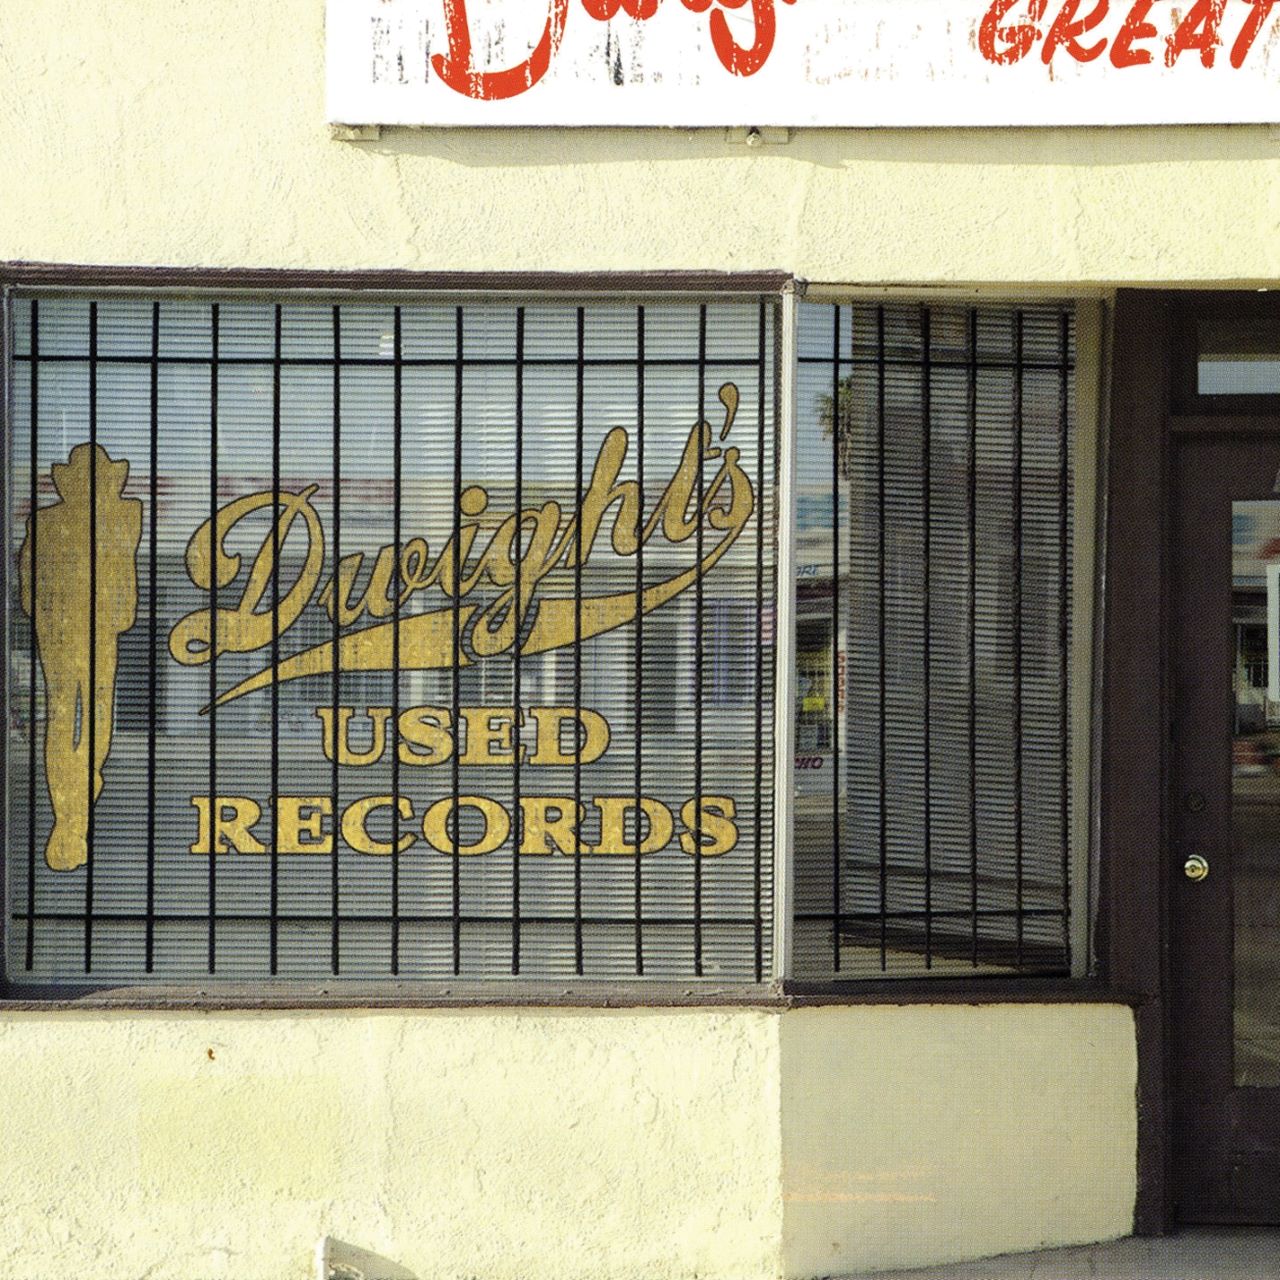 Dwight Yoakam – Used Records cover album